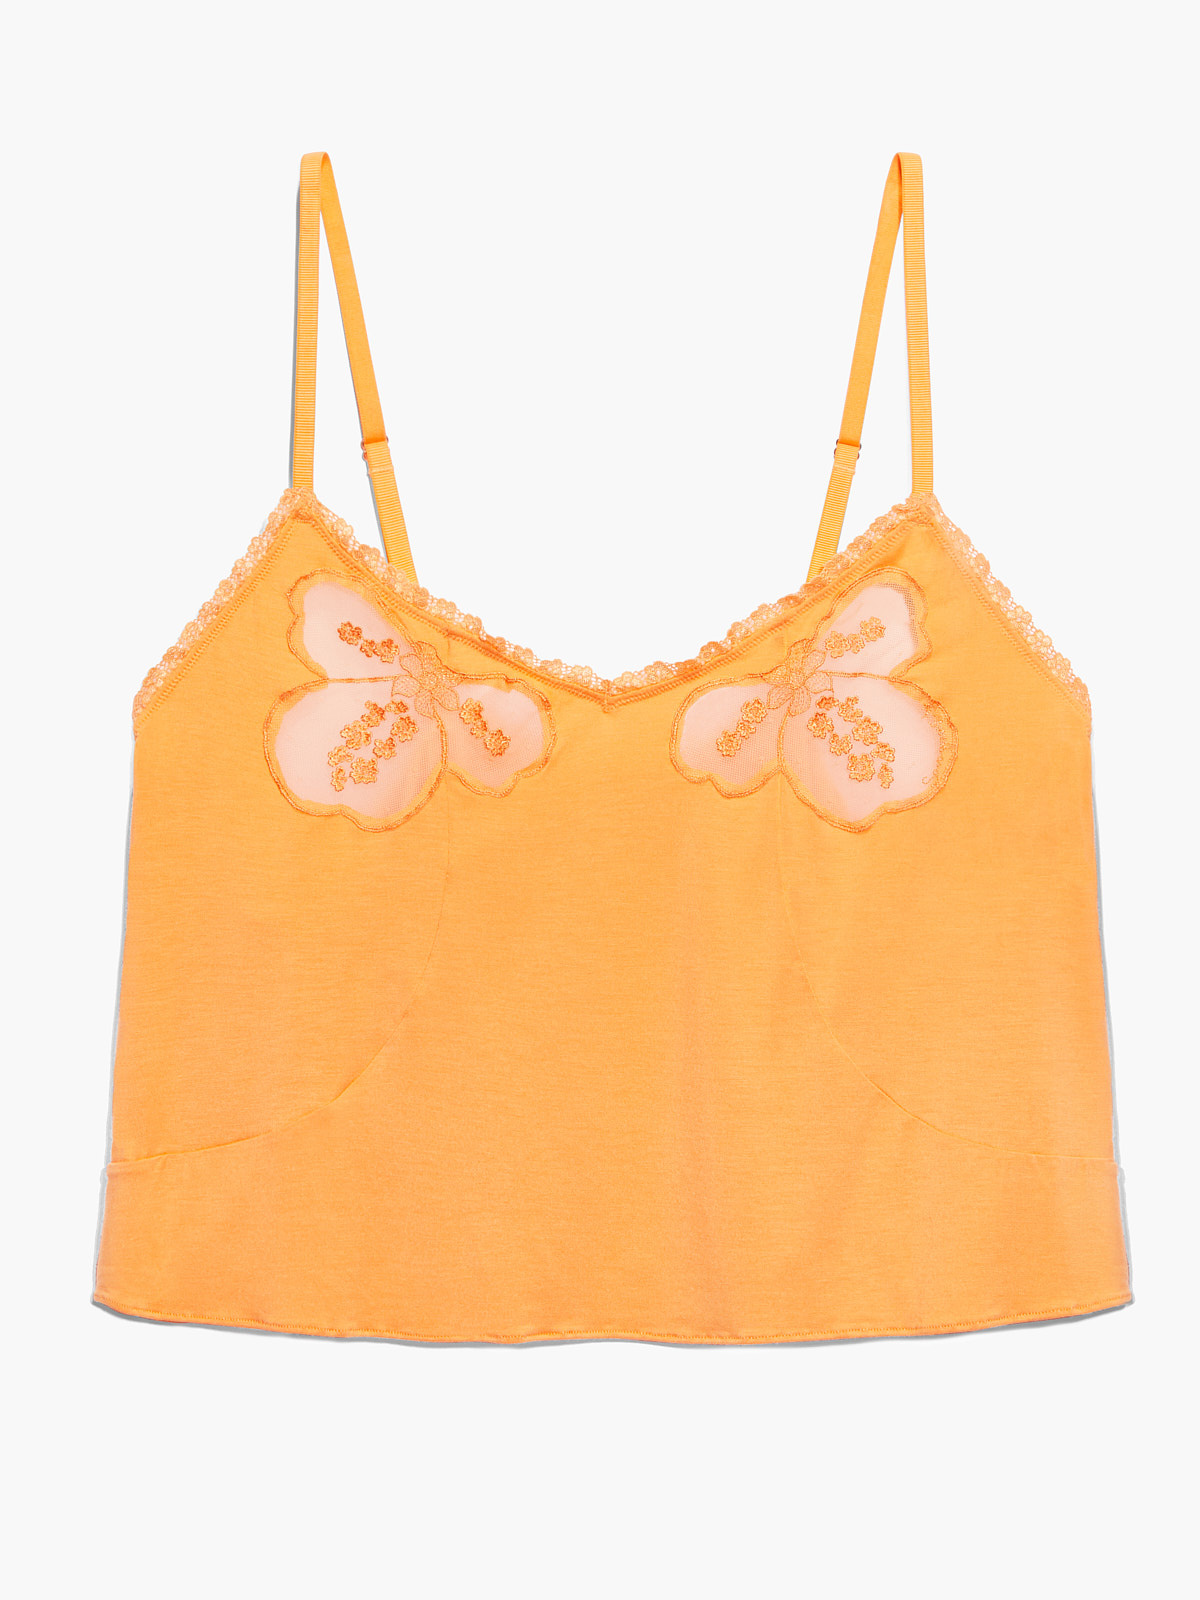 A Peek Behind the Lace Cami in Orange | SAVAGE X FENTY